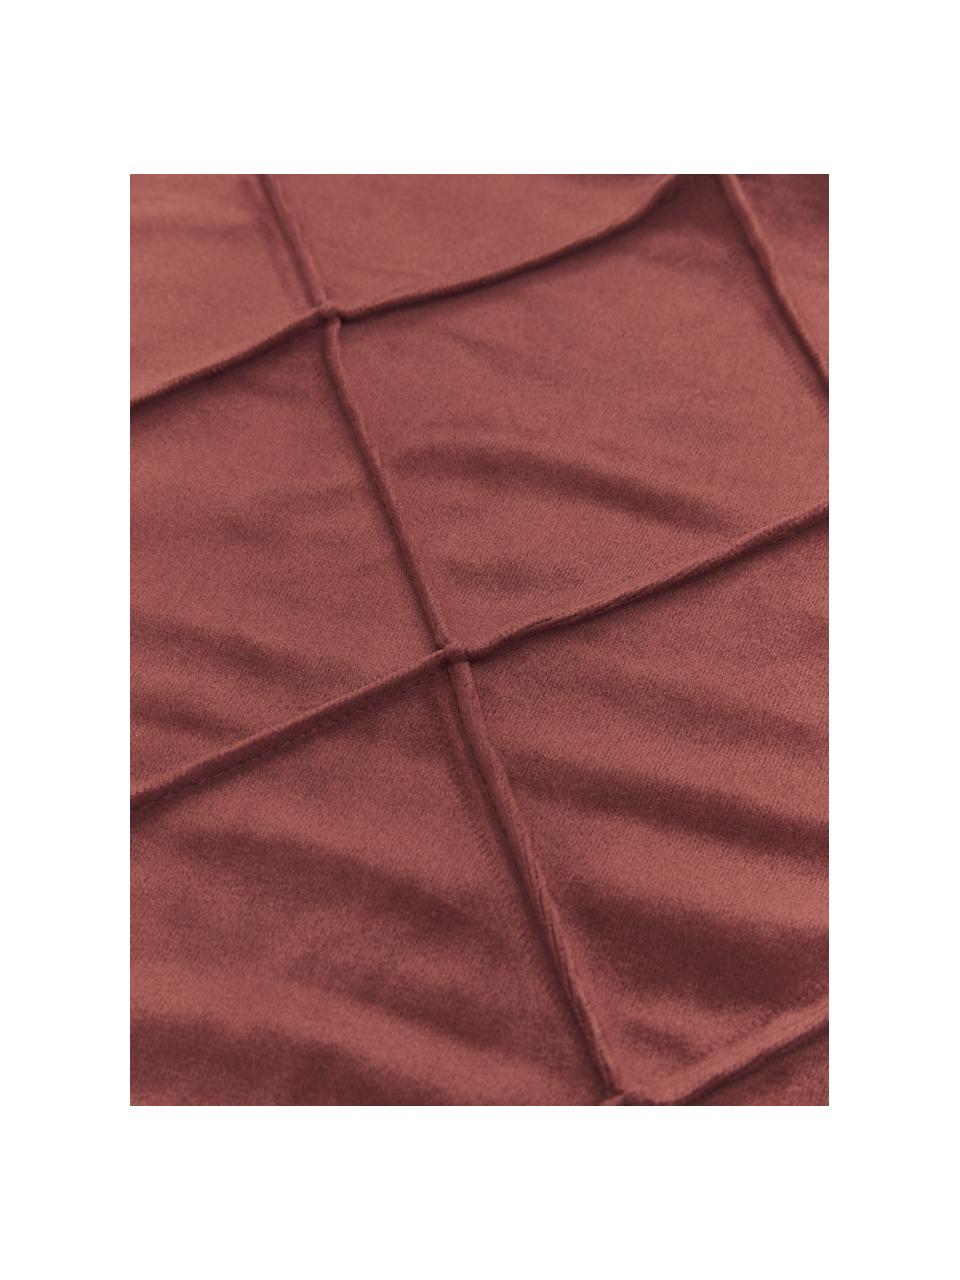 Samt-Kissenhülle Nobless in Terrakotta mit erhabenem Rautenmuster, 100% Polyestersamt, Terrakotta, B 50 x L 50 cm